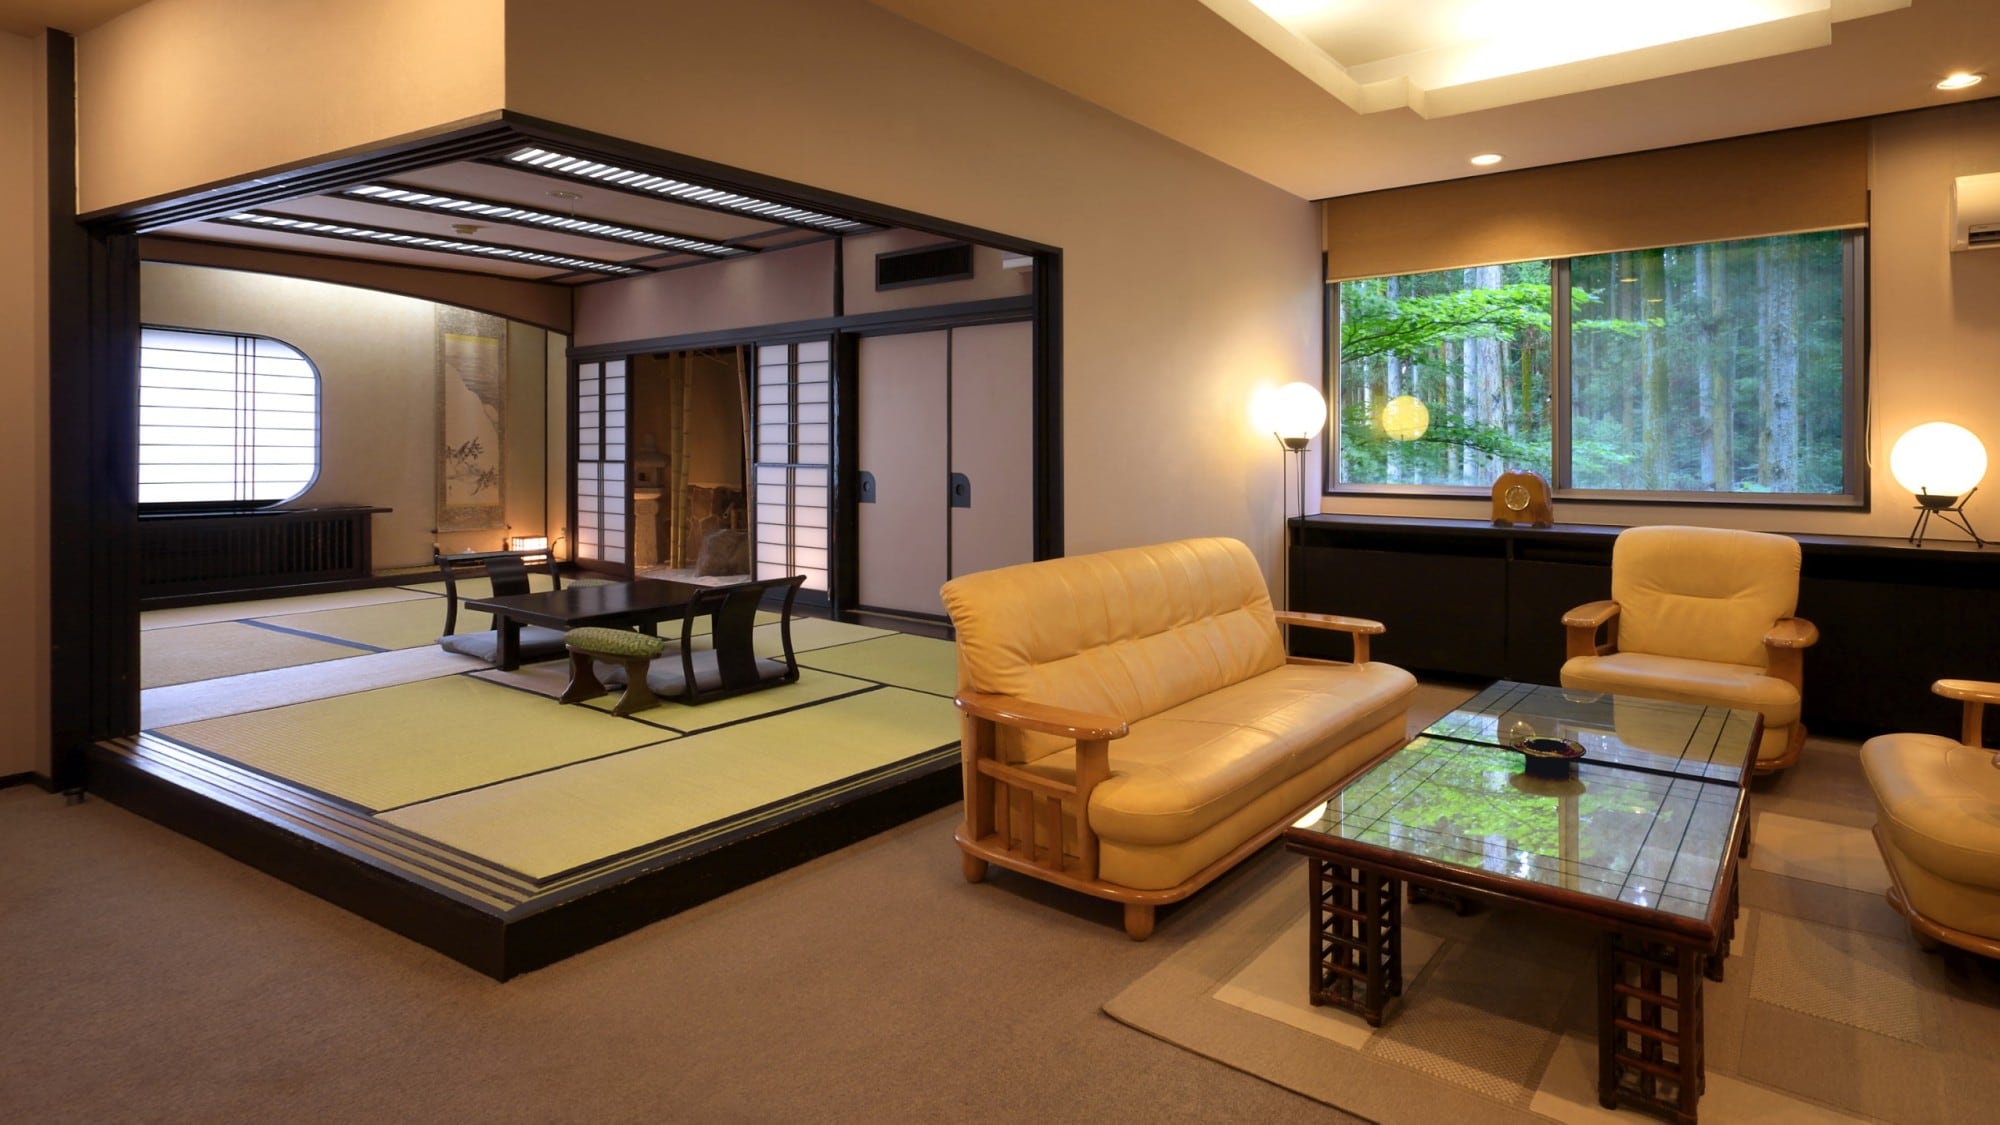 Kamar khusus kamar bergaya Jepang 10 tikar tatami + kamar twin + ruang tamu